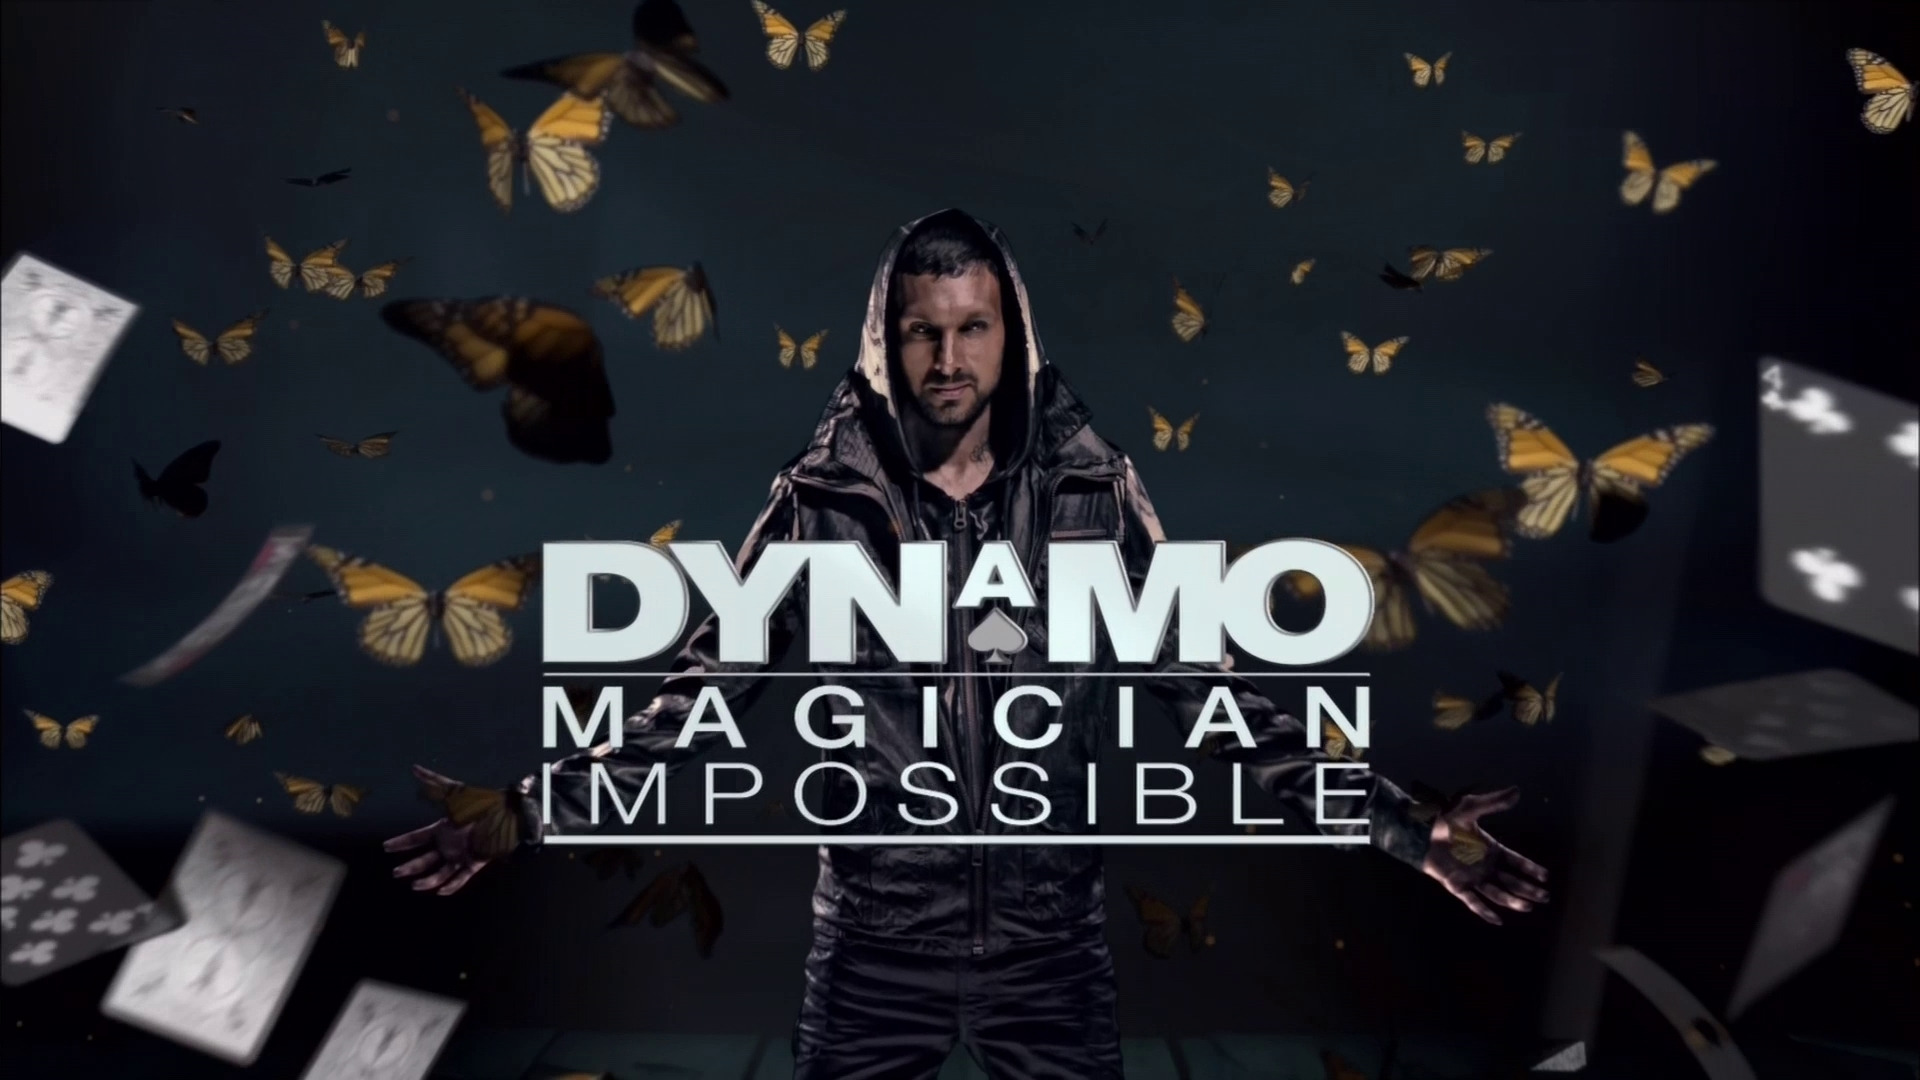 Show Dynamo: Magician Impossible